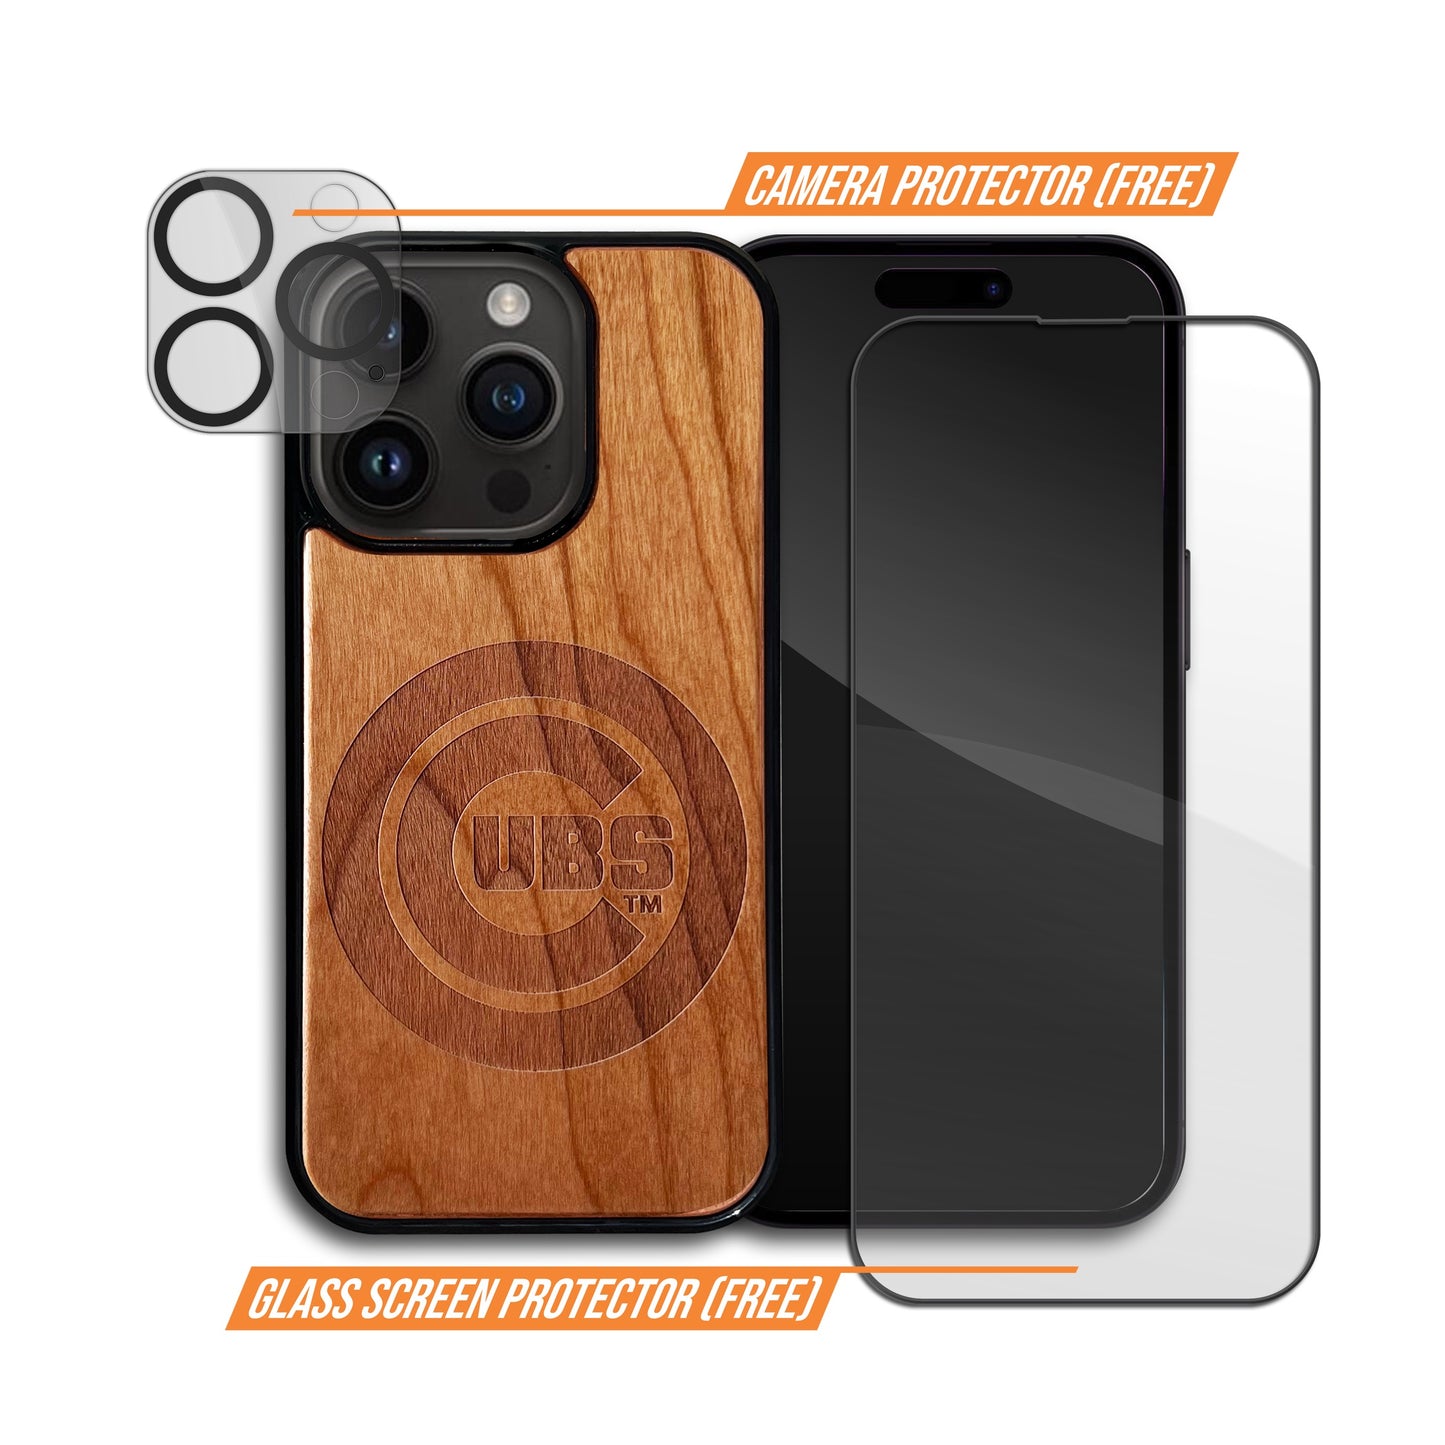 Chicago Cubs® Crest - Wooden Phone Case